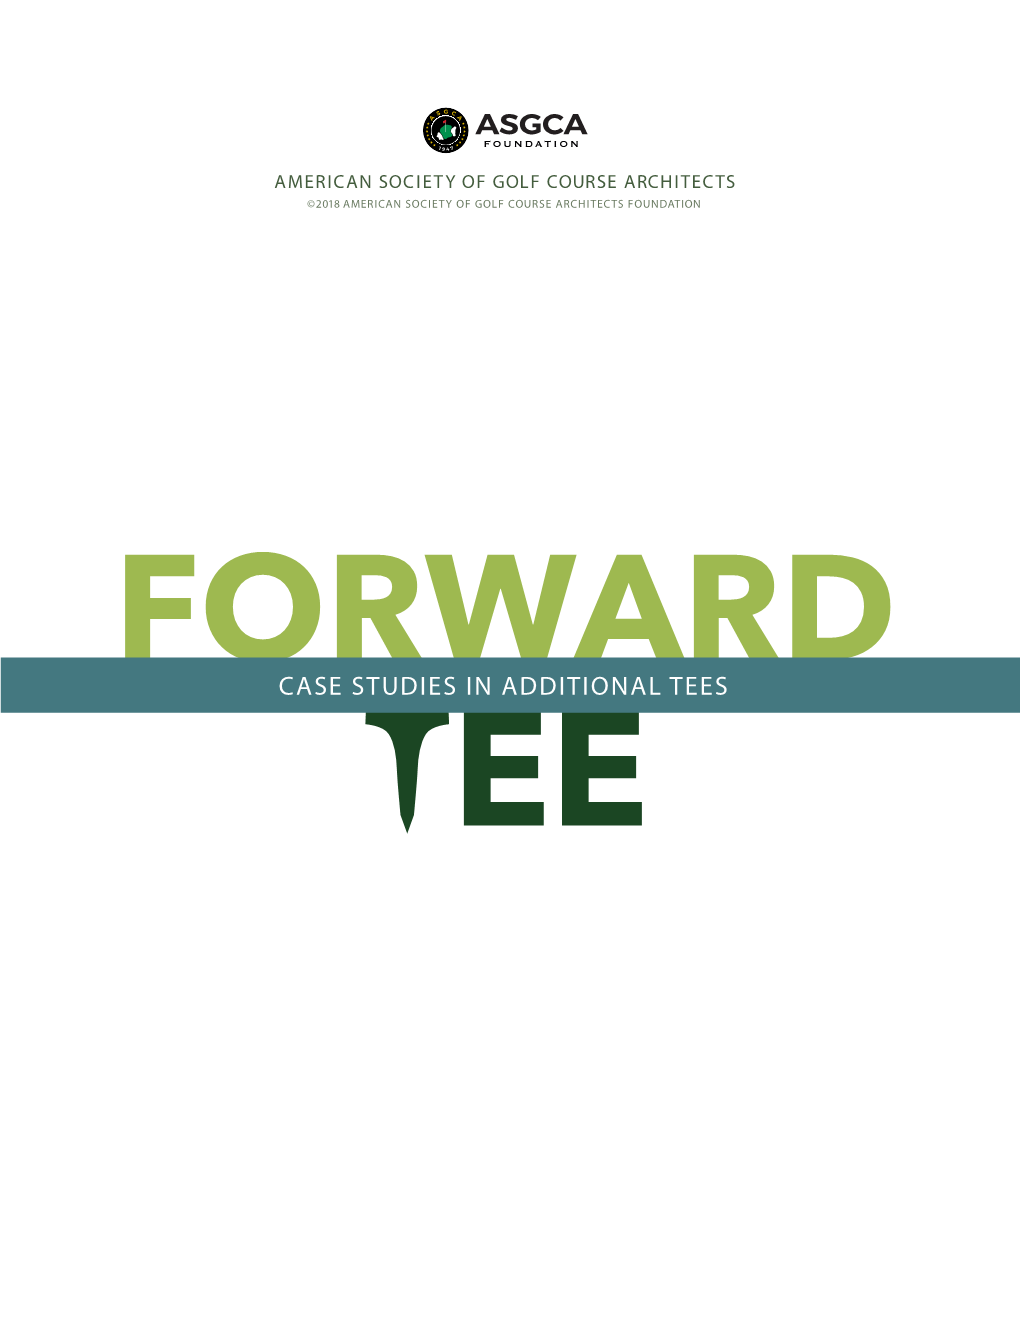 Forward Tee: Case Studies in Additional Tees